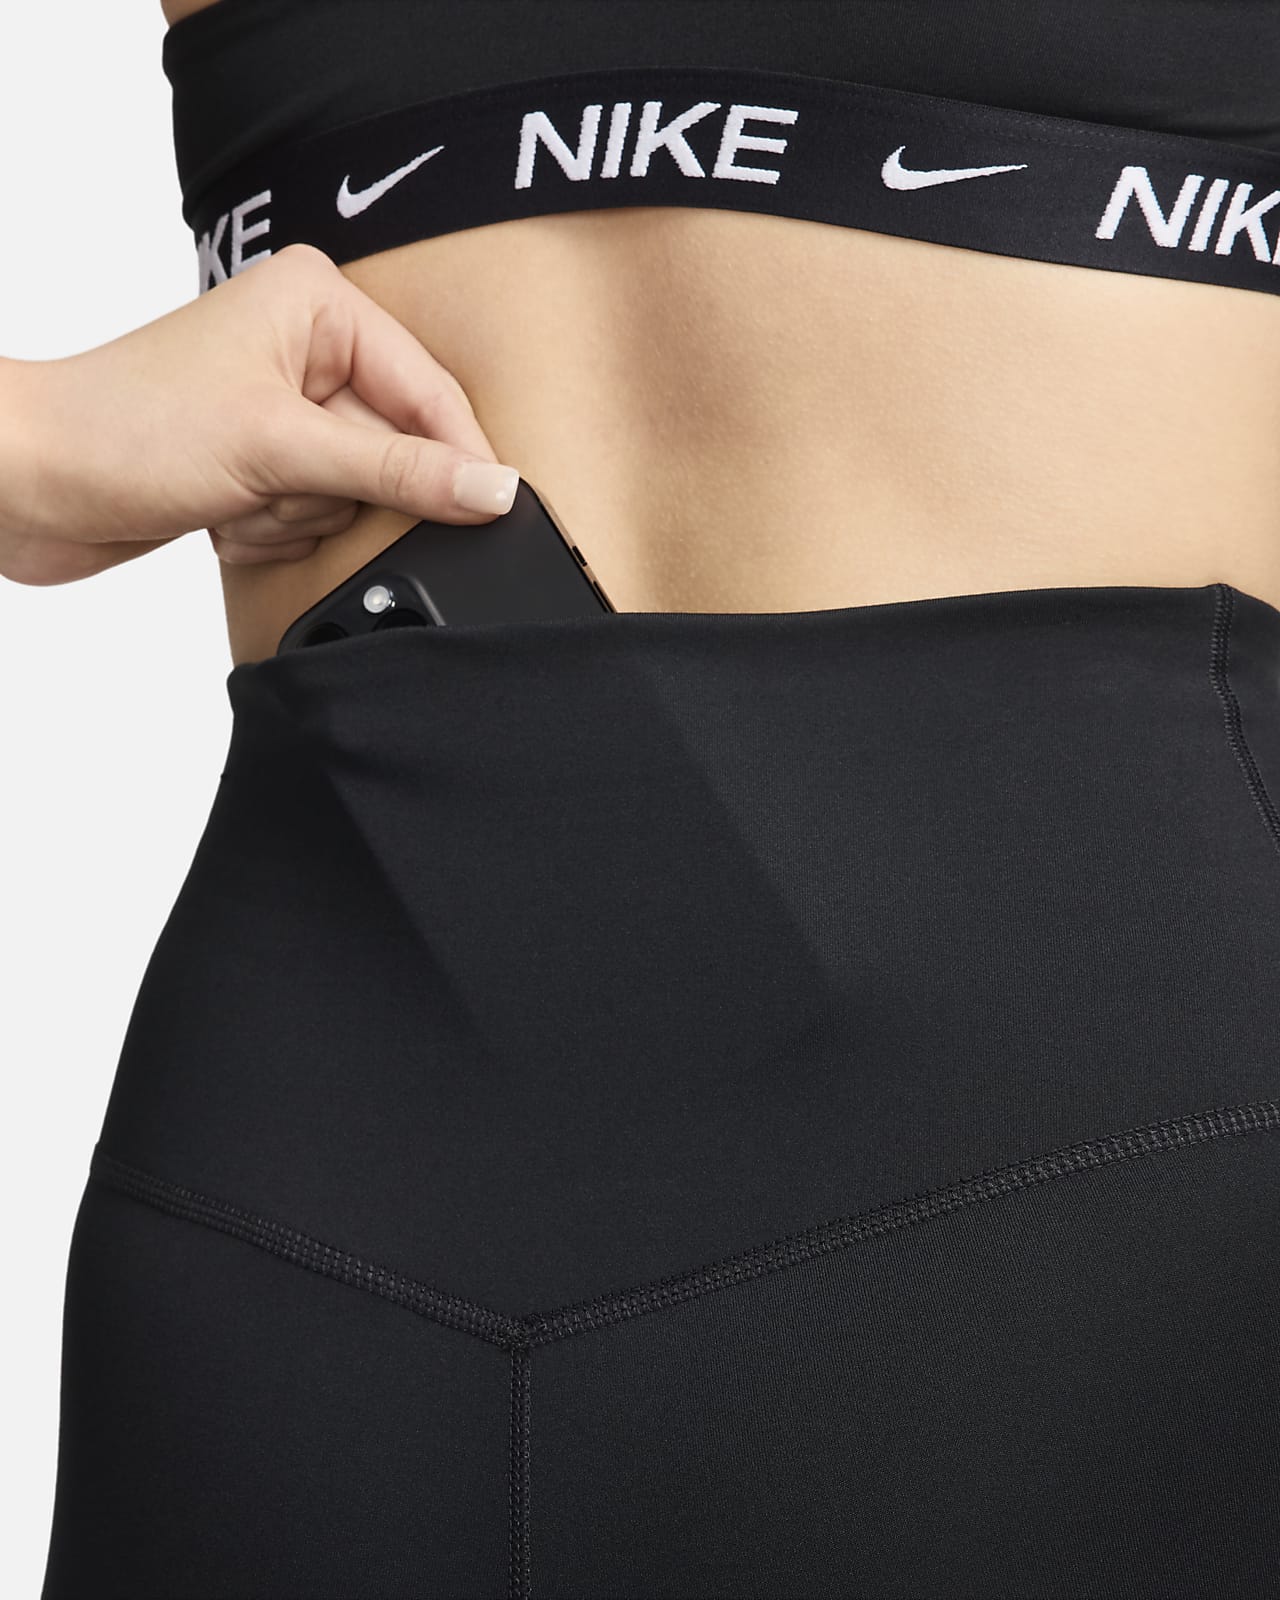 Nike One Luxe Women's Micro Rib Black Full Length Leggings | The Rainy Days